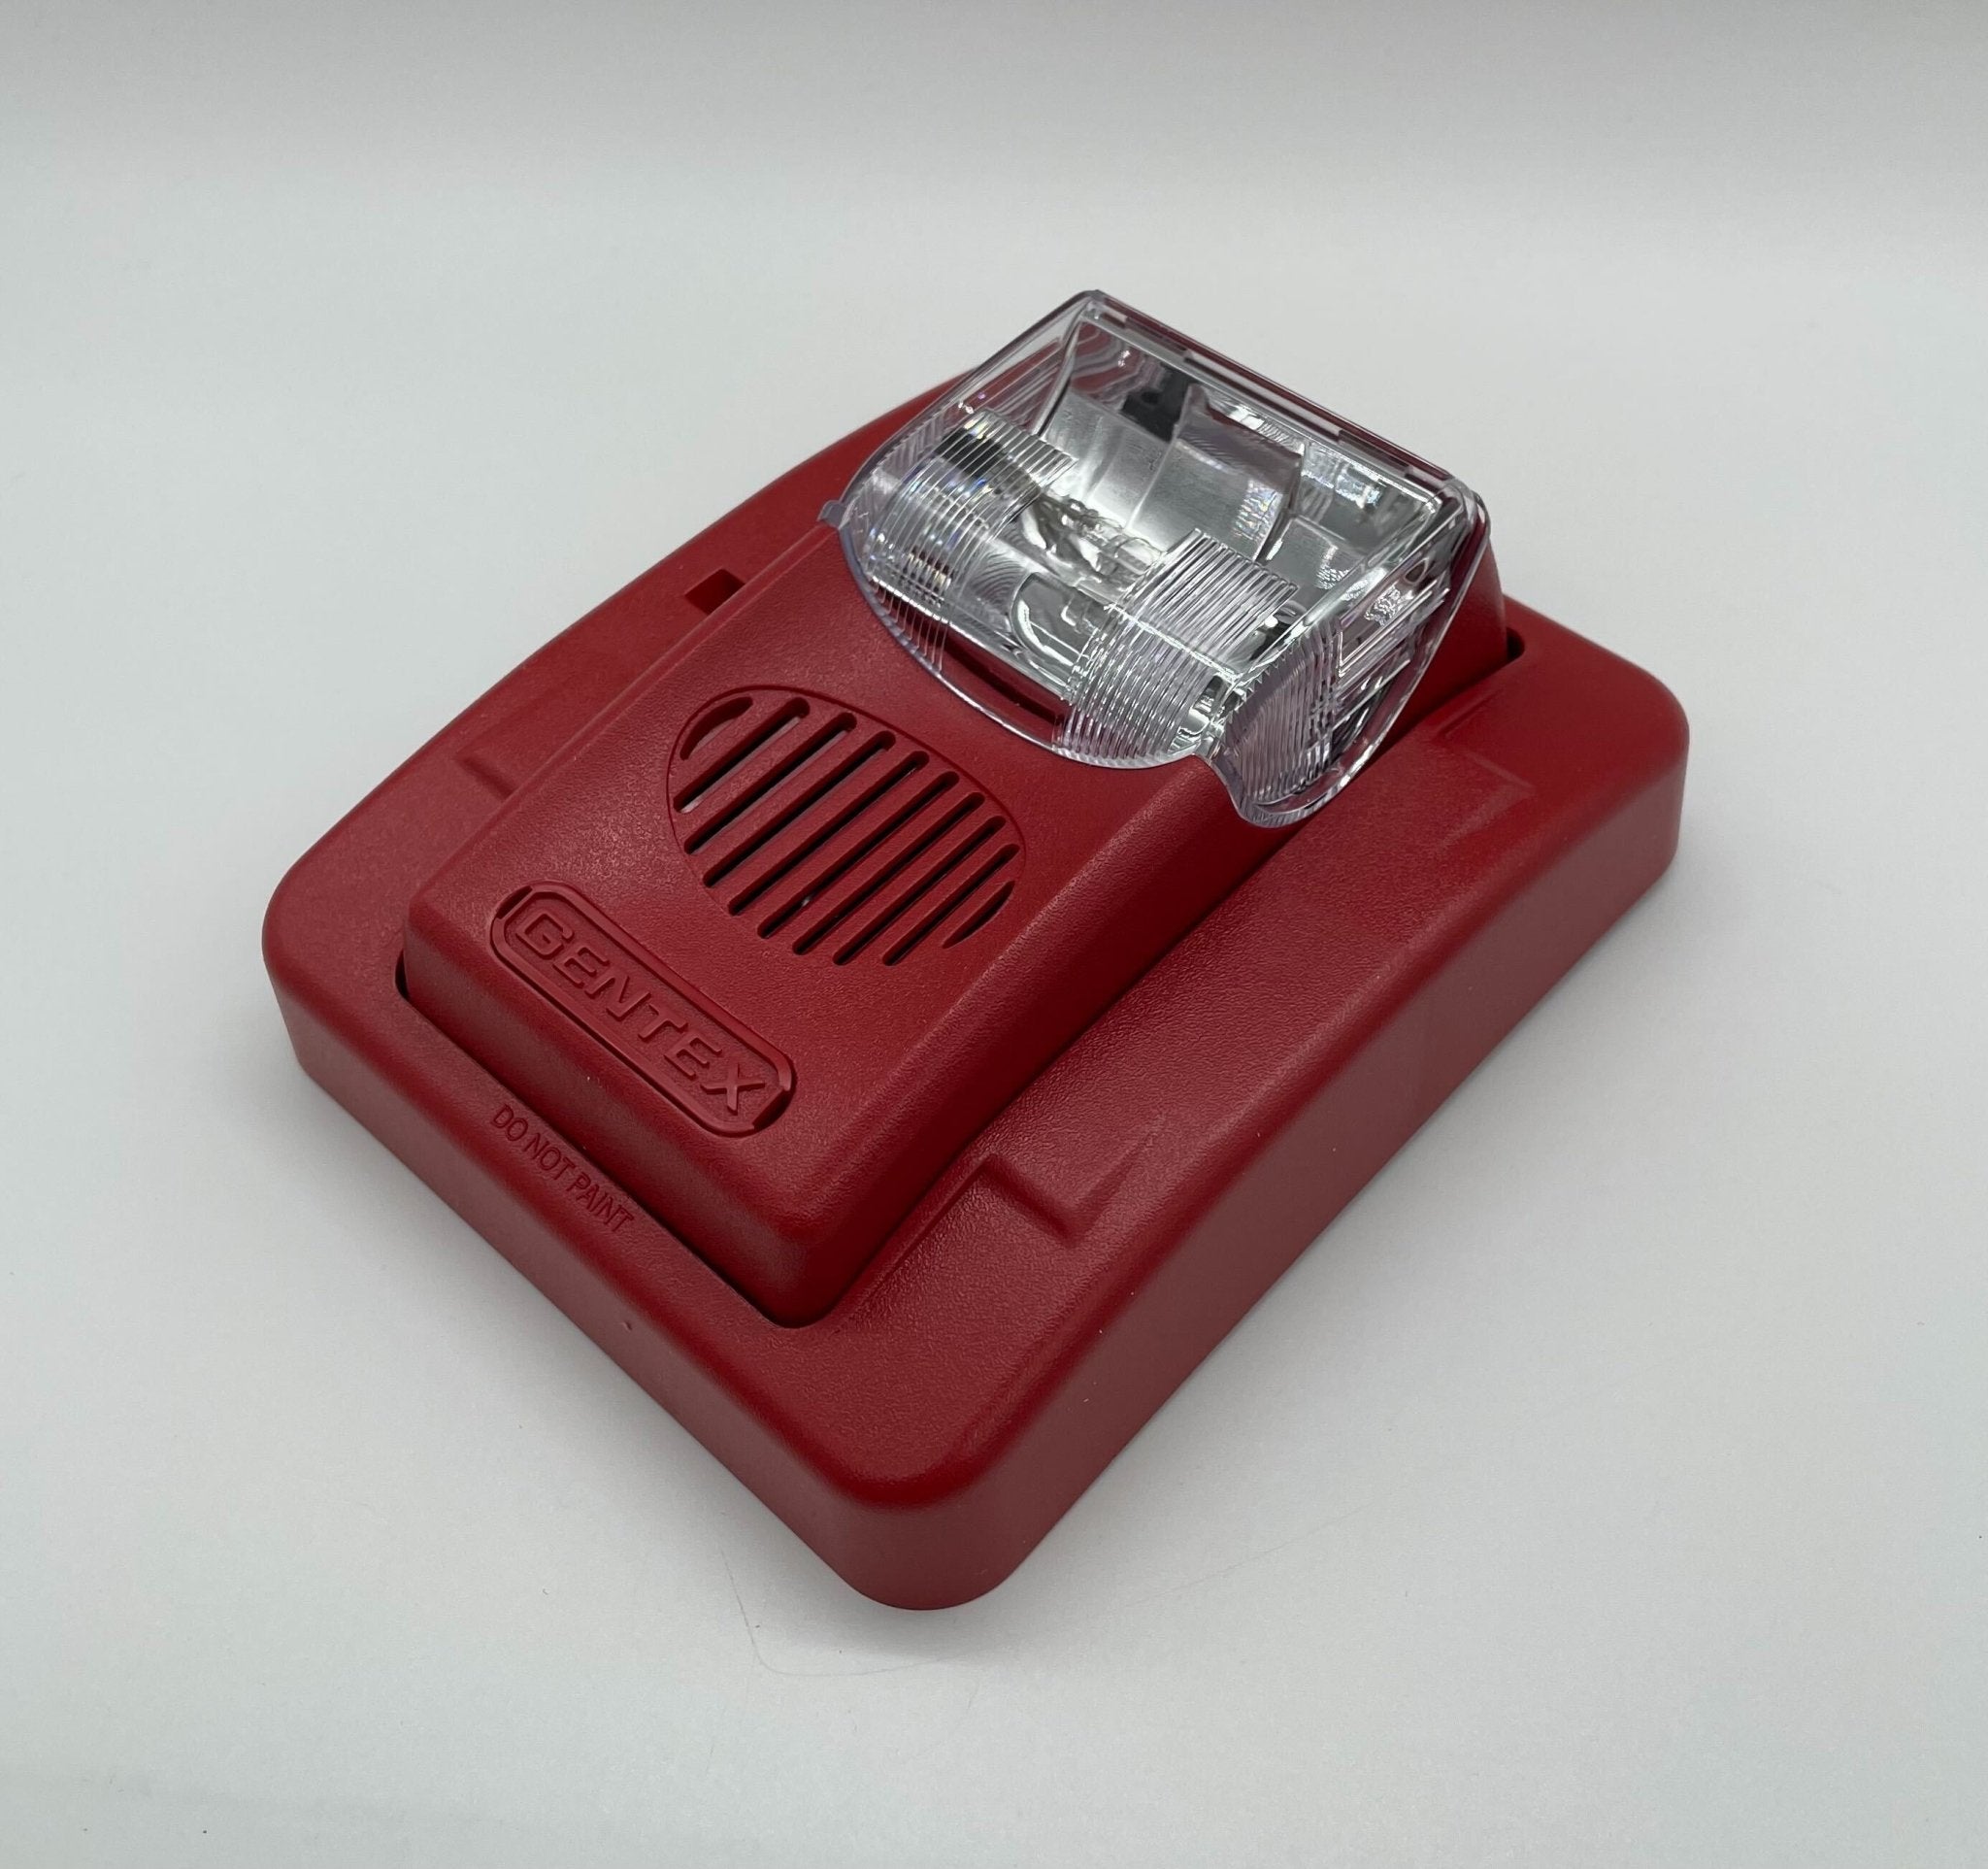 Gentex GEC3-12PWR - The Fire Alarm Supplier